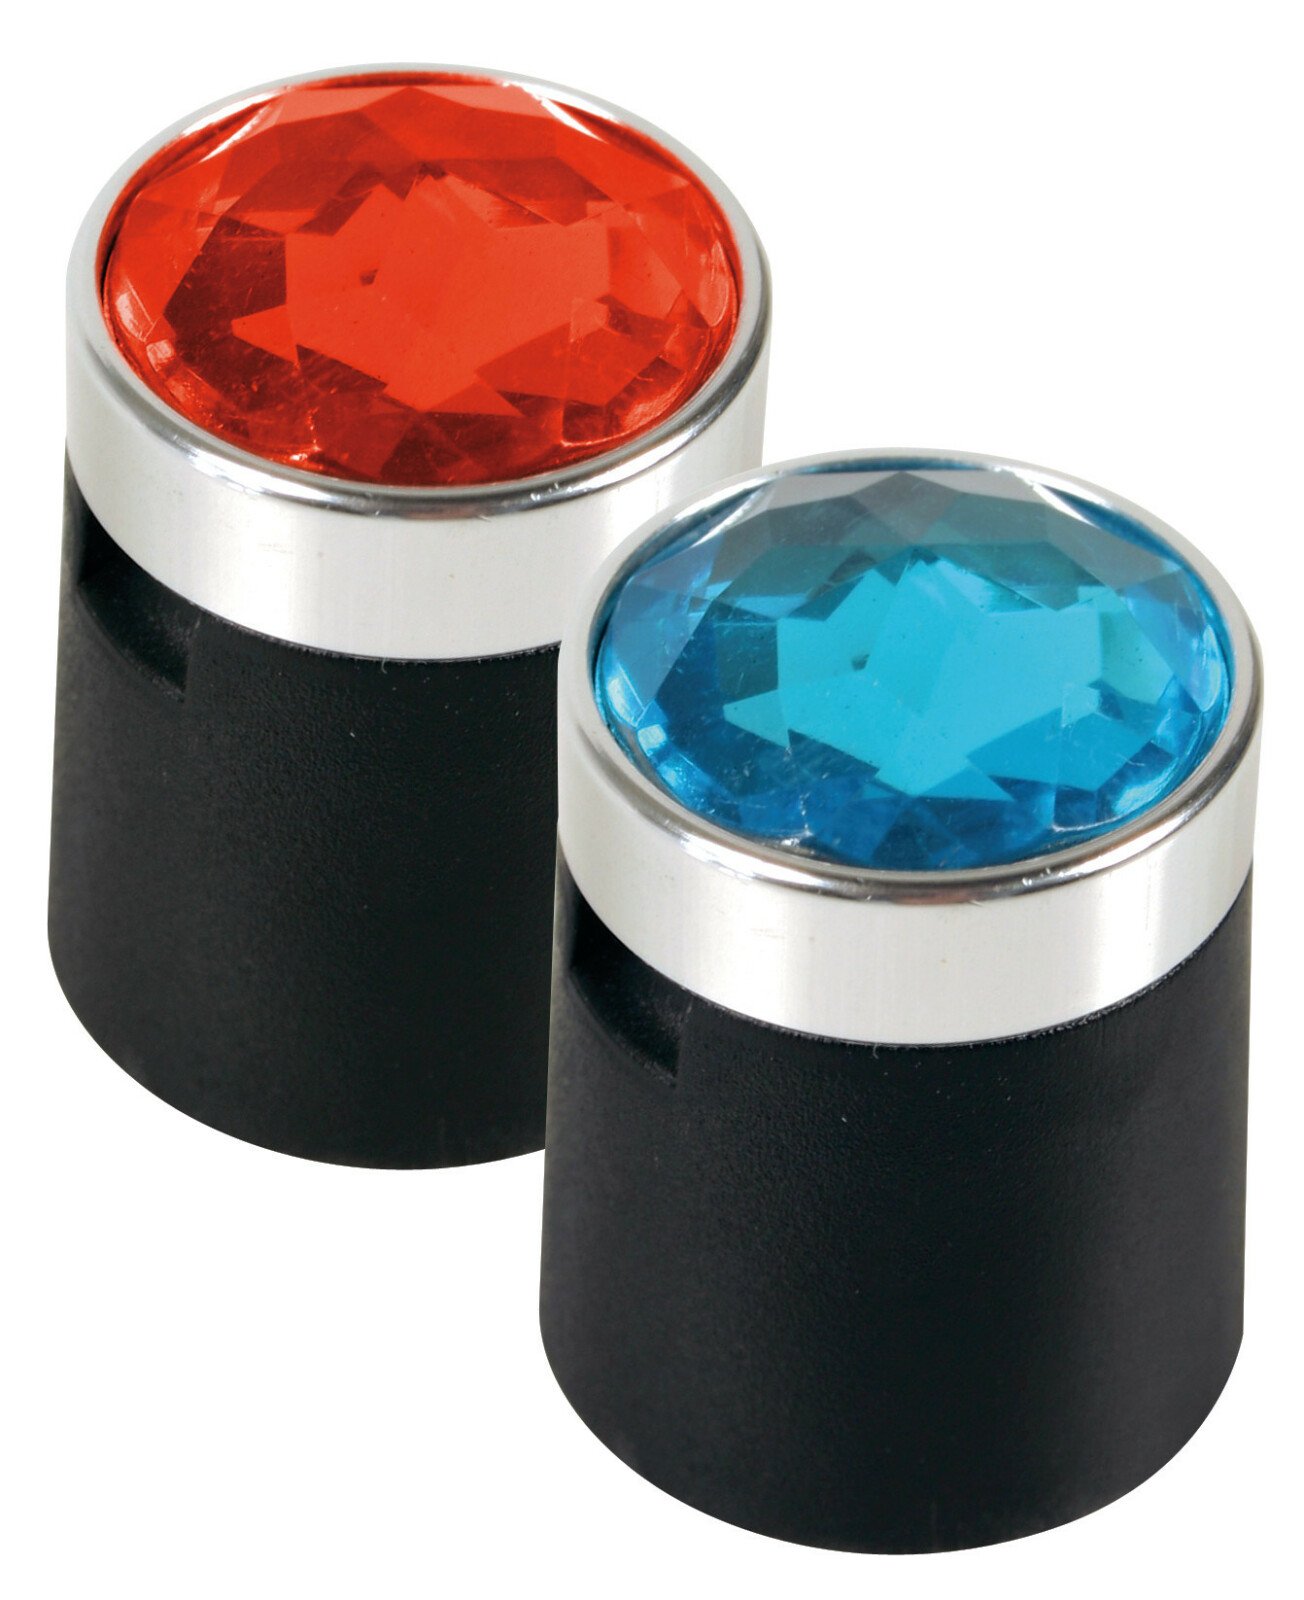 Colour Crystal nut caps, 20pcs - Hex 17mm - Blue - Resealed thumb